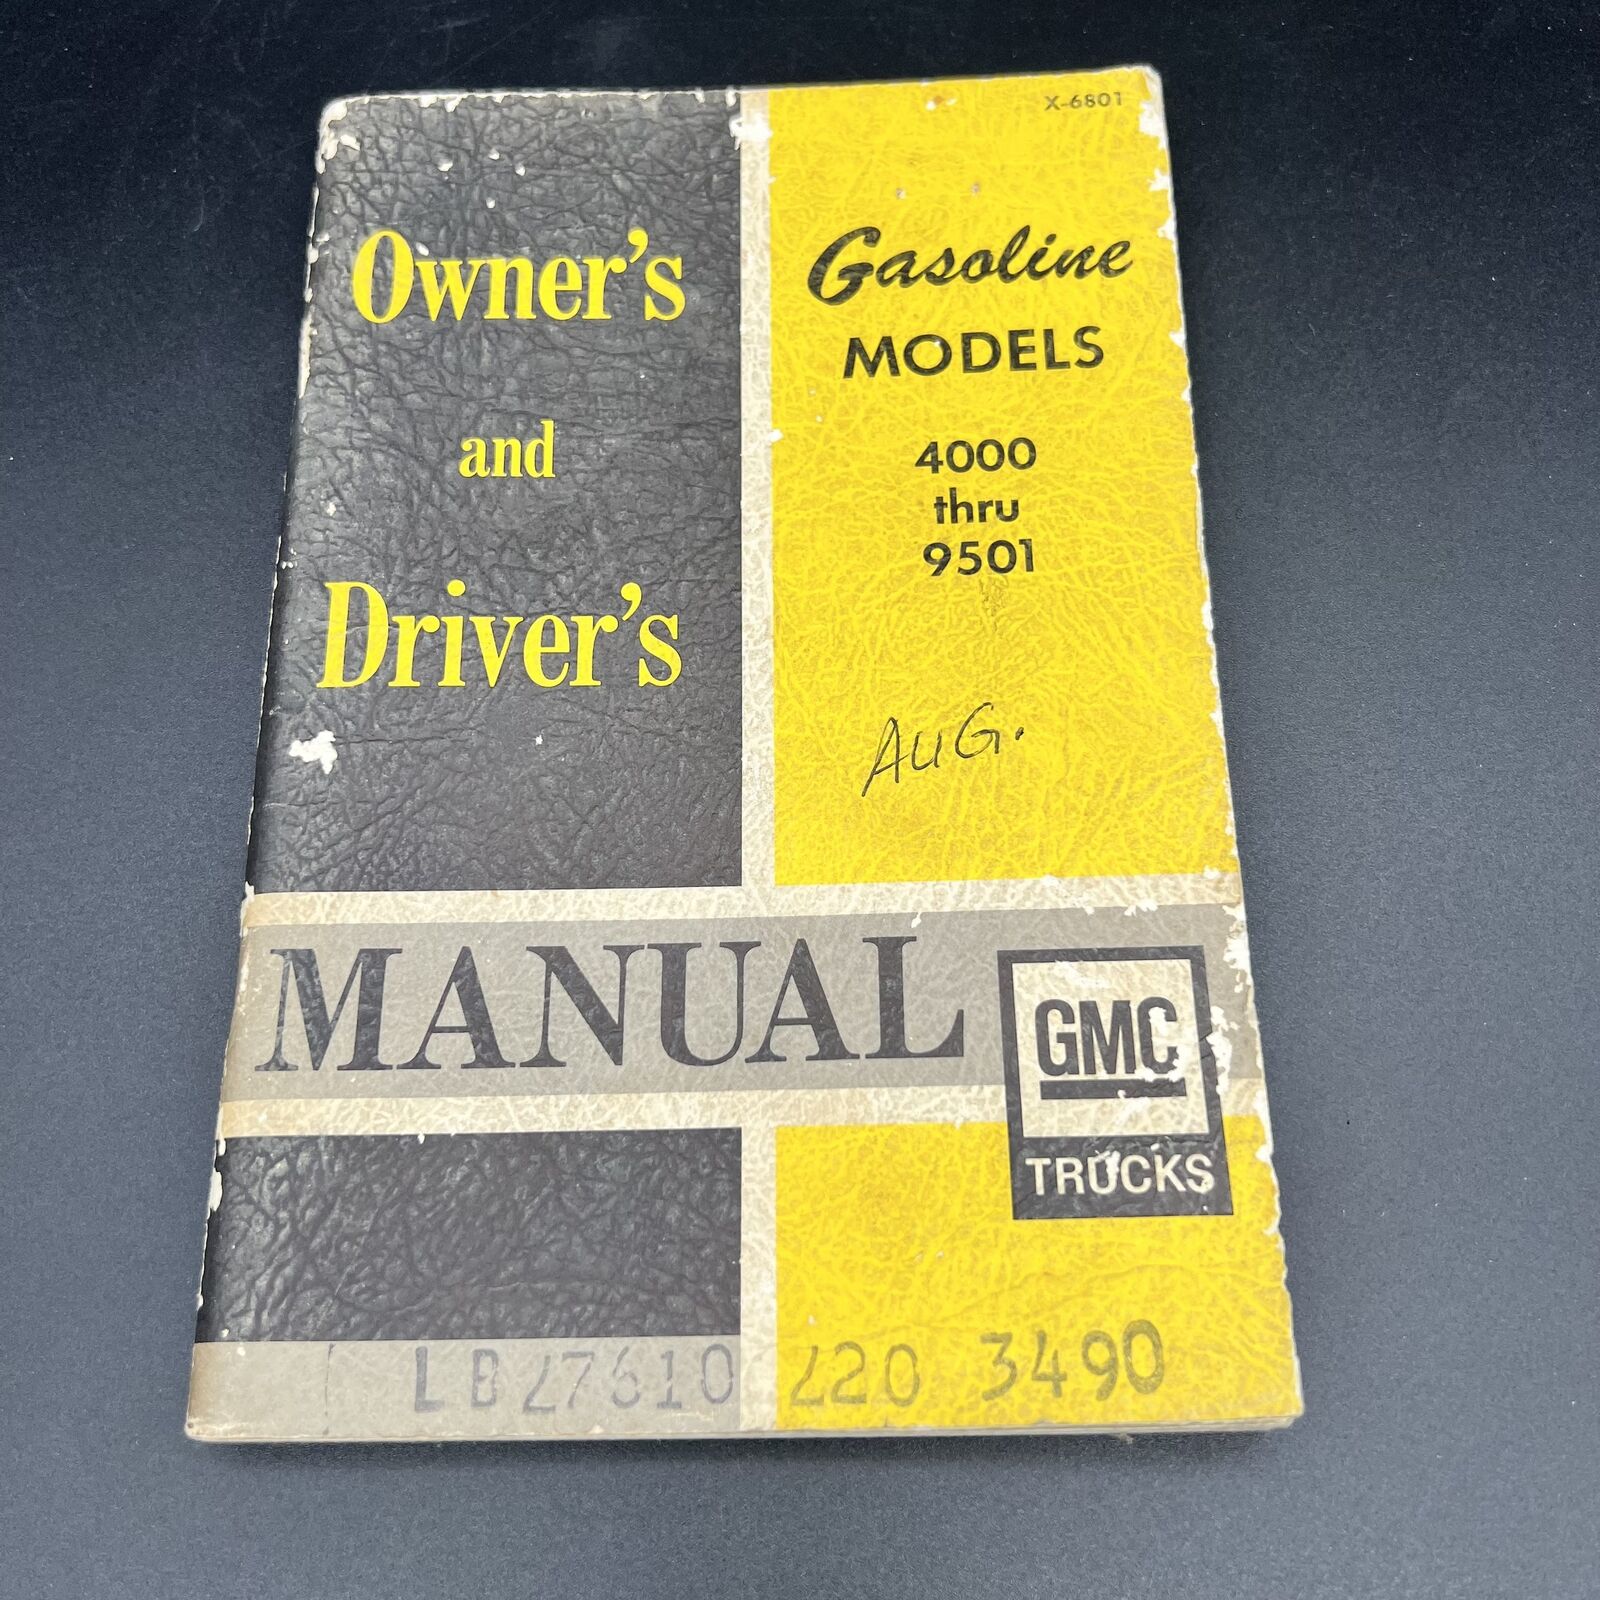 GMC Trucks 1967 Owner\'s & Driver\'s Manual Gasoline Models 4000 thru 9501